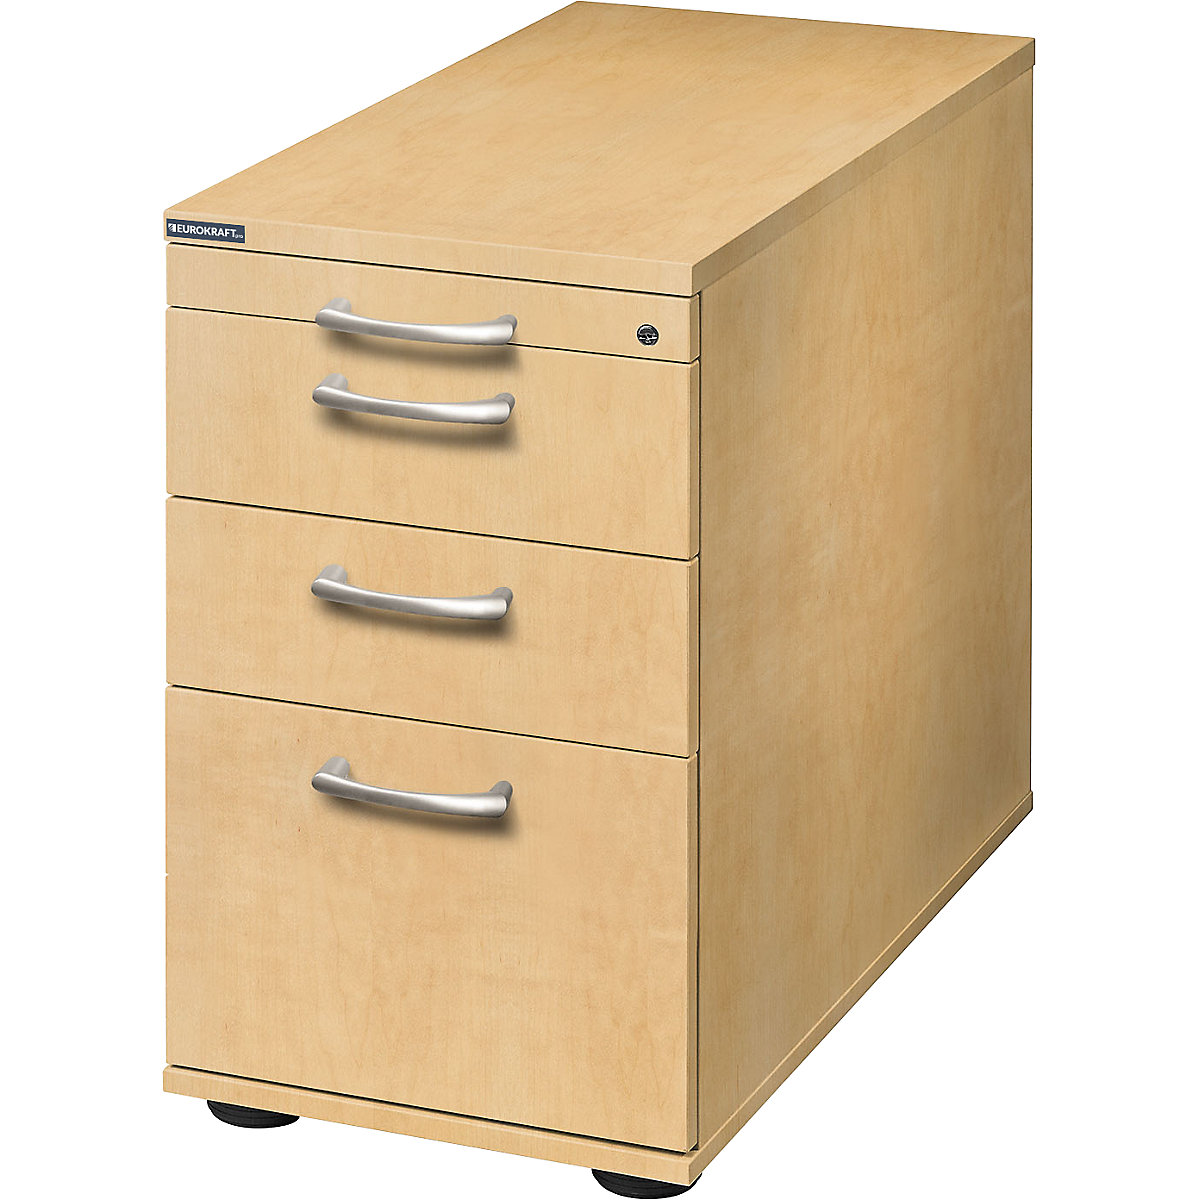 Fixed pedestal ANNY – eurokraft pro, 1 utensil drawer, 2 storage drawers, 1 filing drawer, maple finish-8